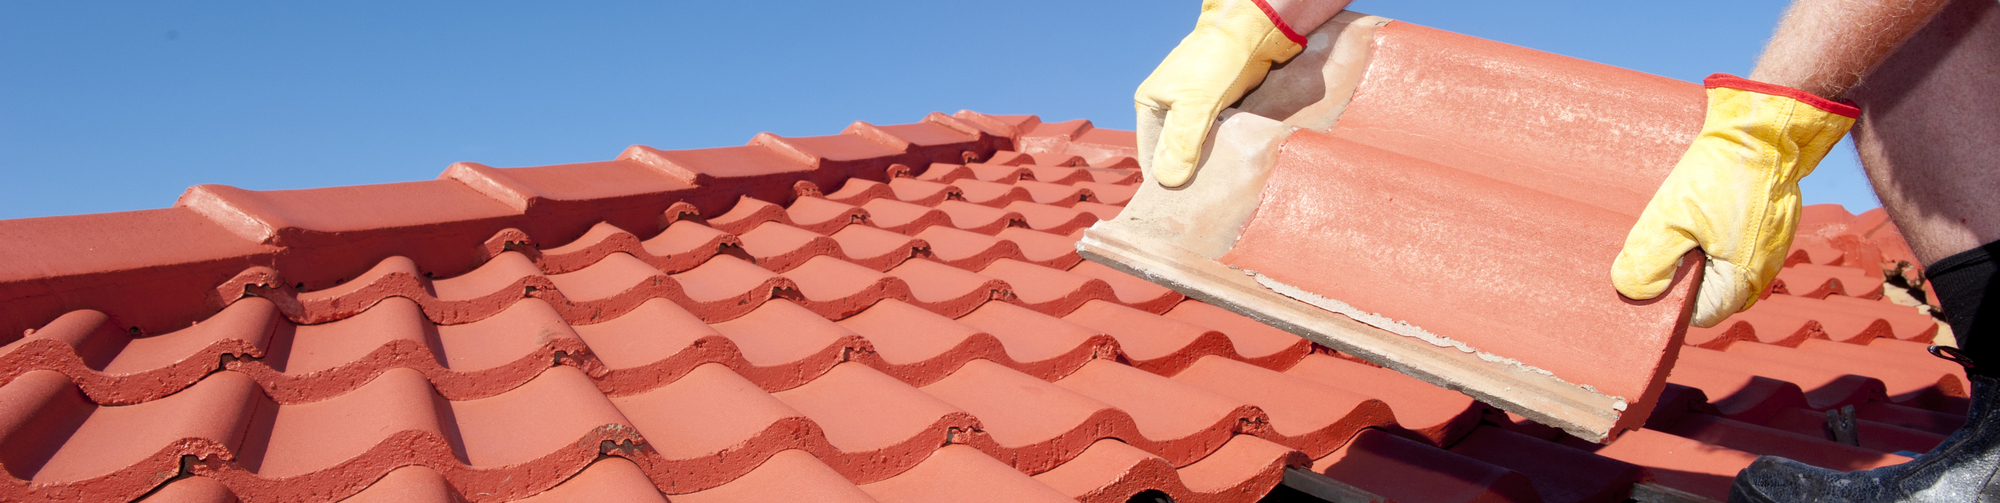 Man placing tile roof